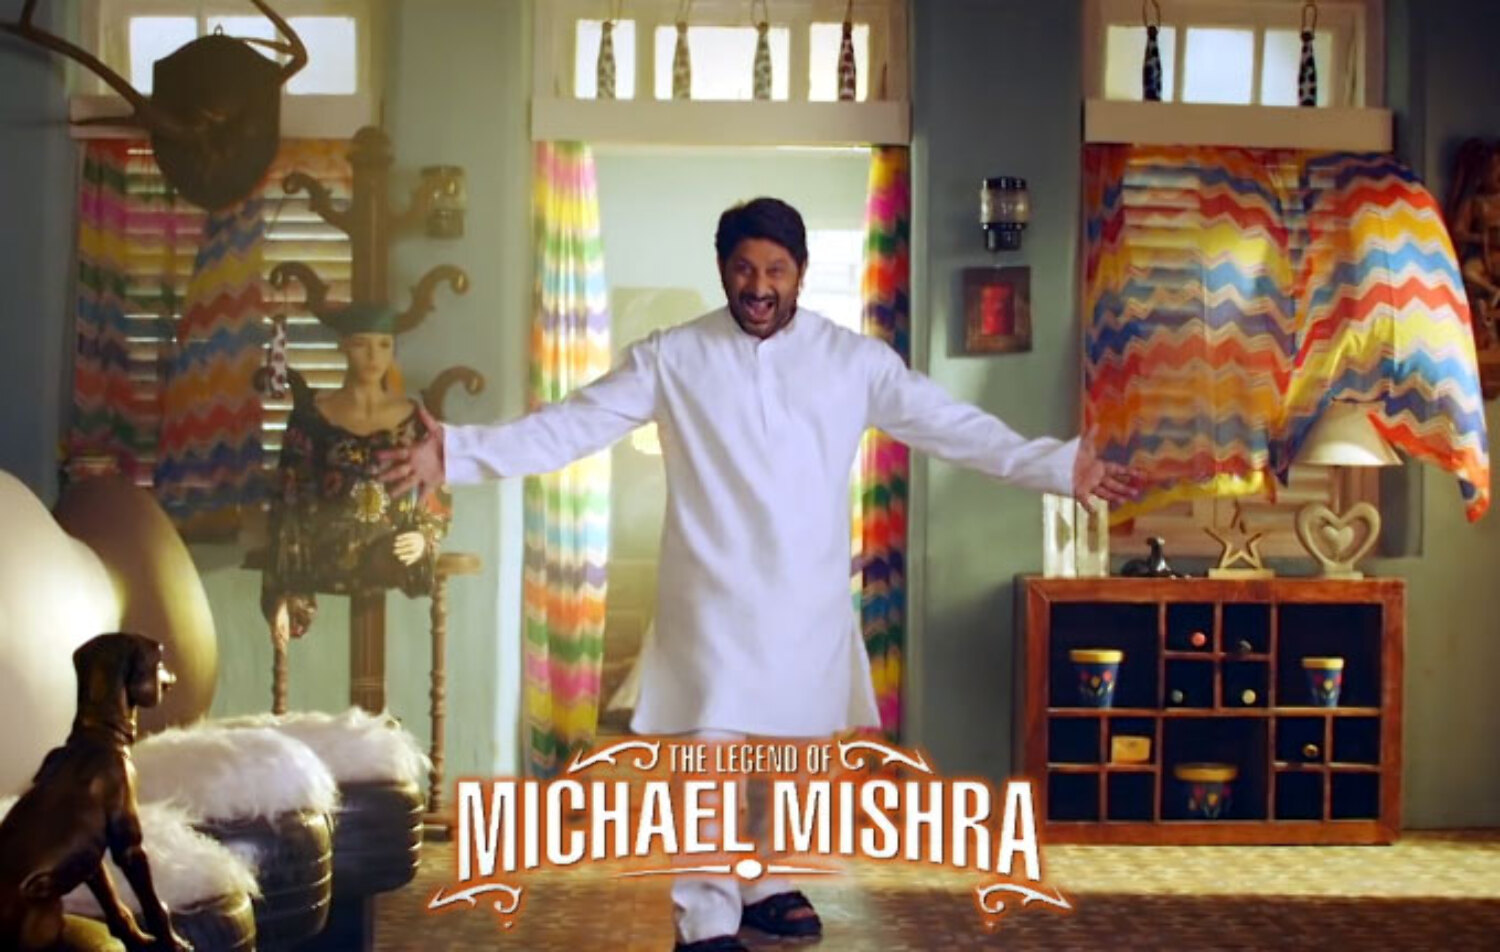 The Legend of Michael Mishra 5 movie